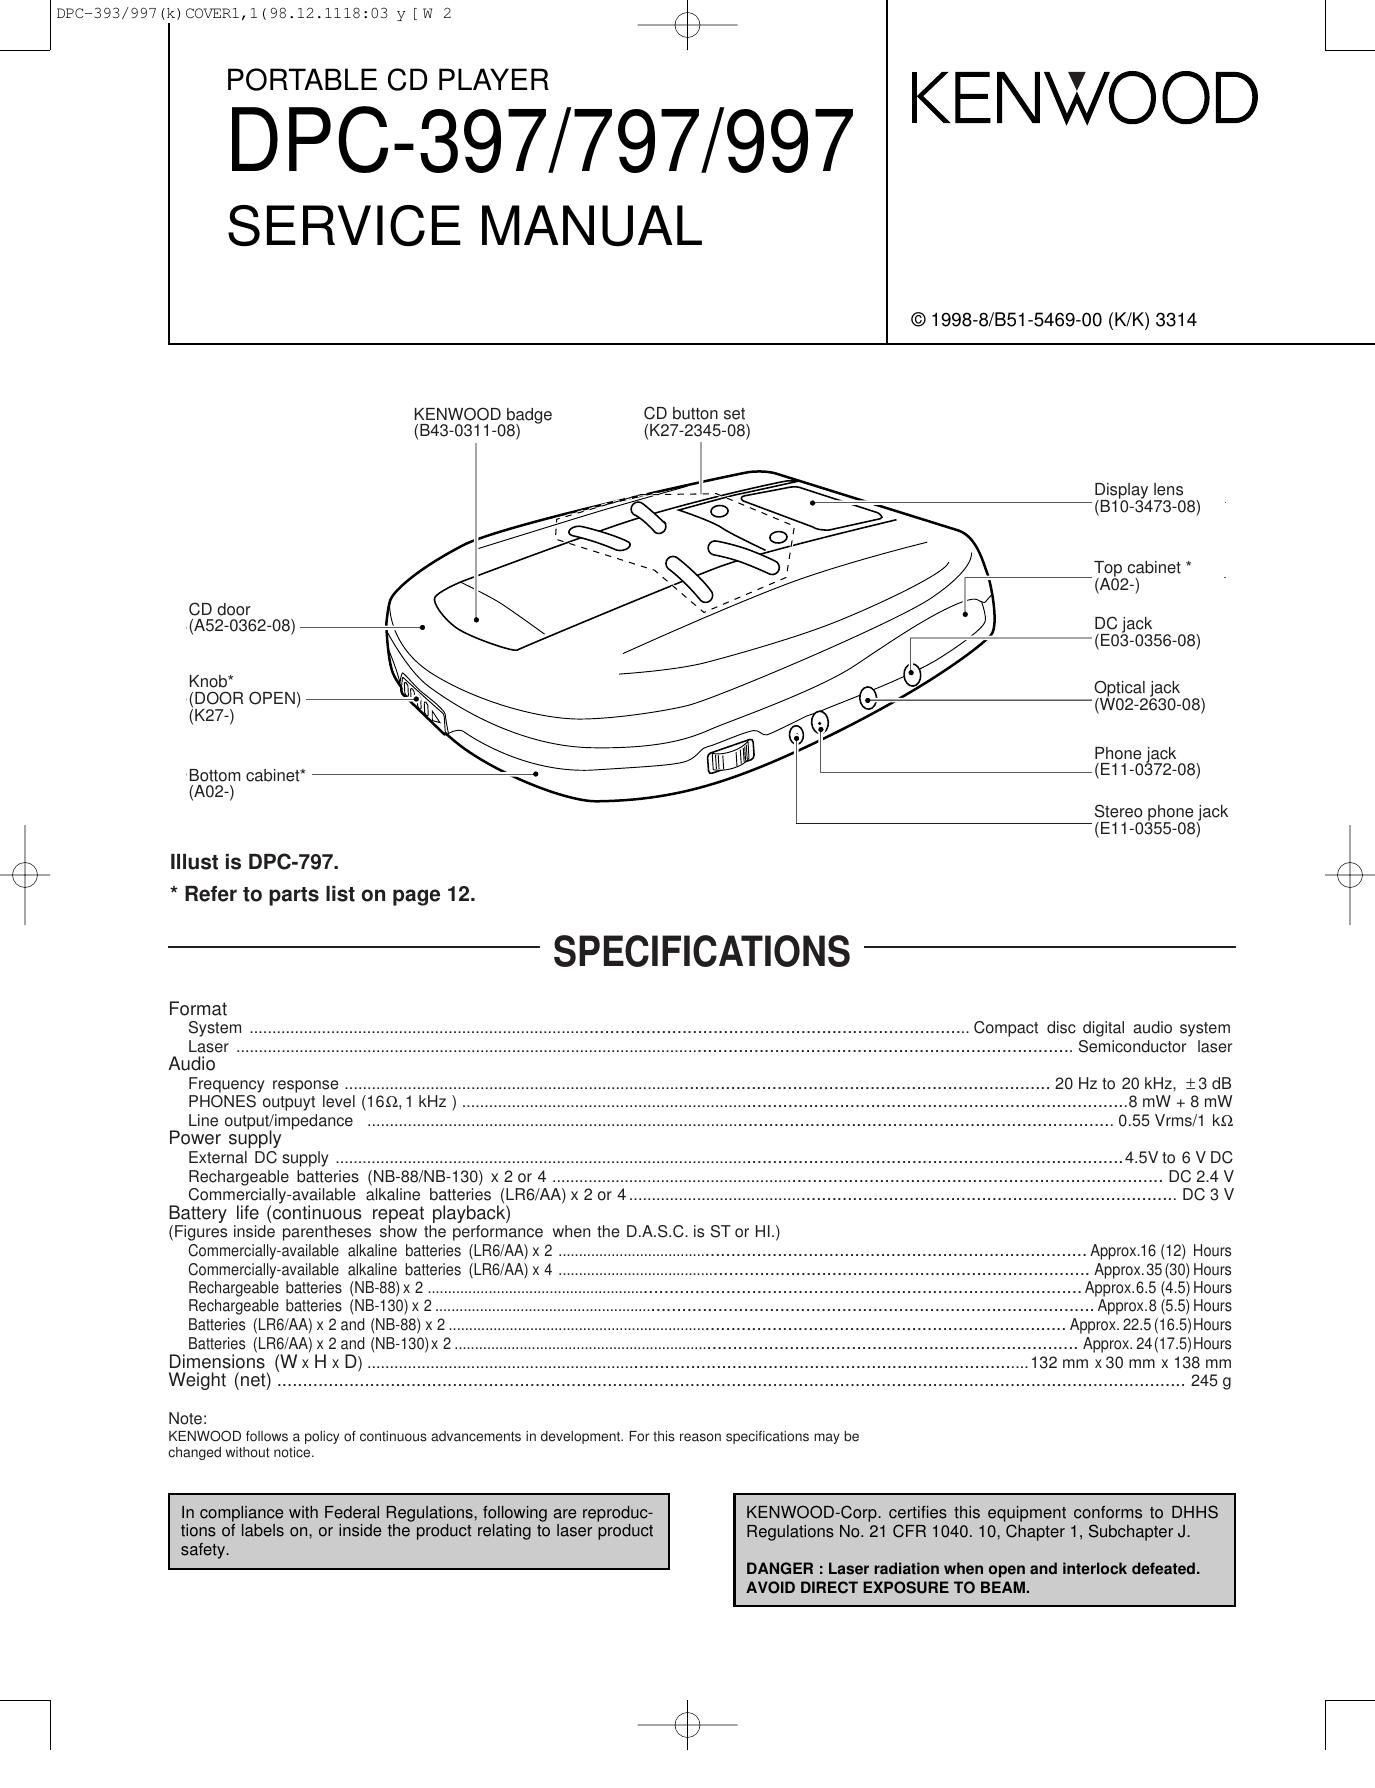 Kenwood DPC 997 Service Manual